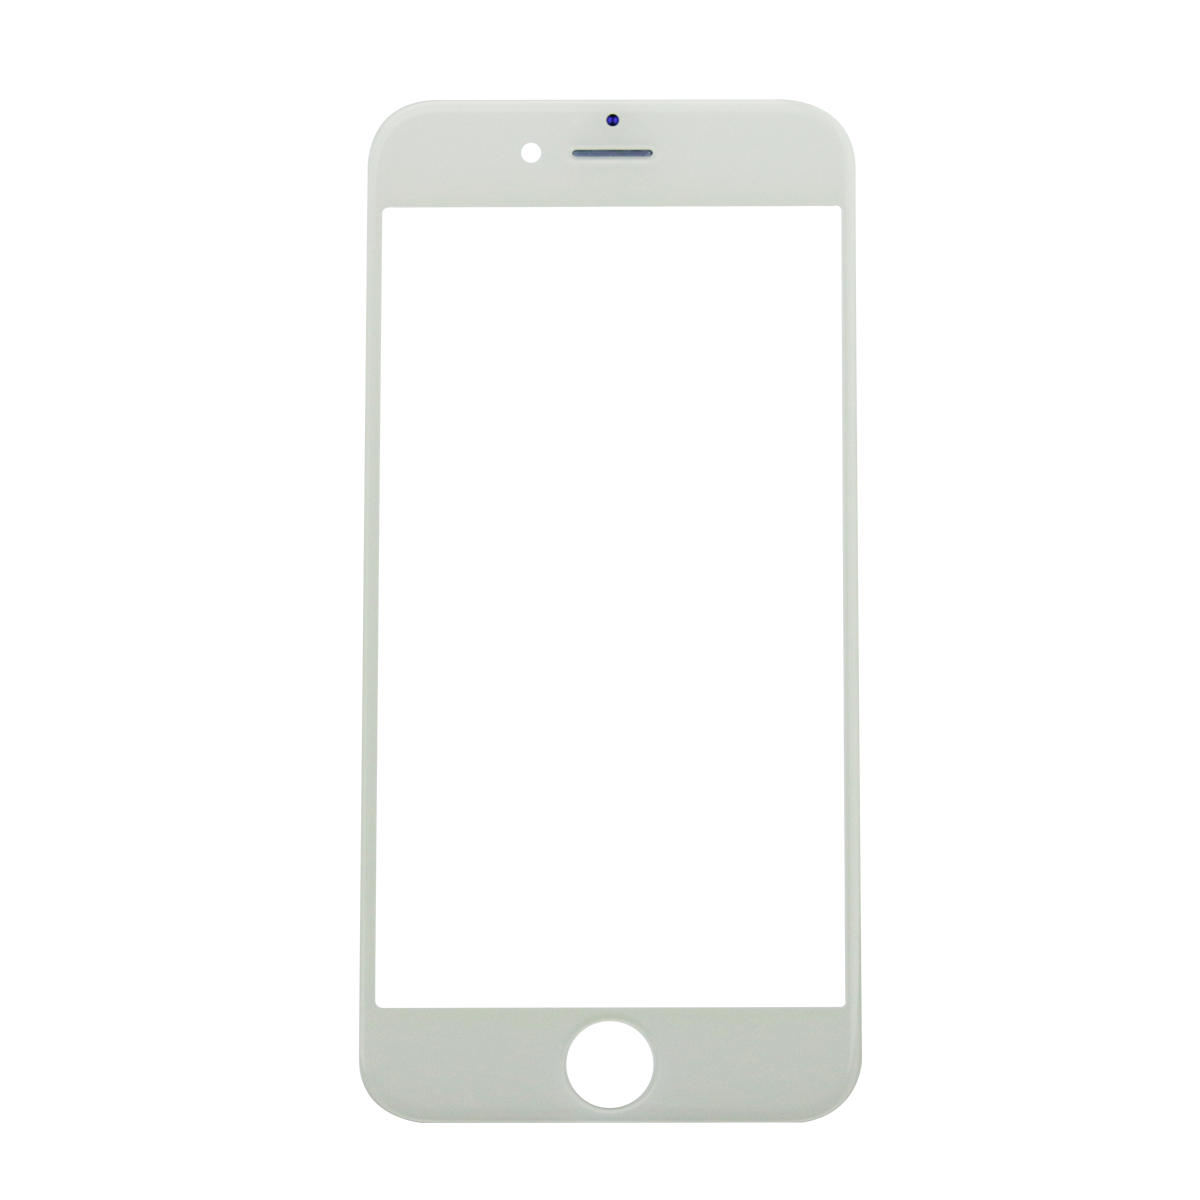 IPhone PNG-Afbeelding met Transparante achtergrond